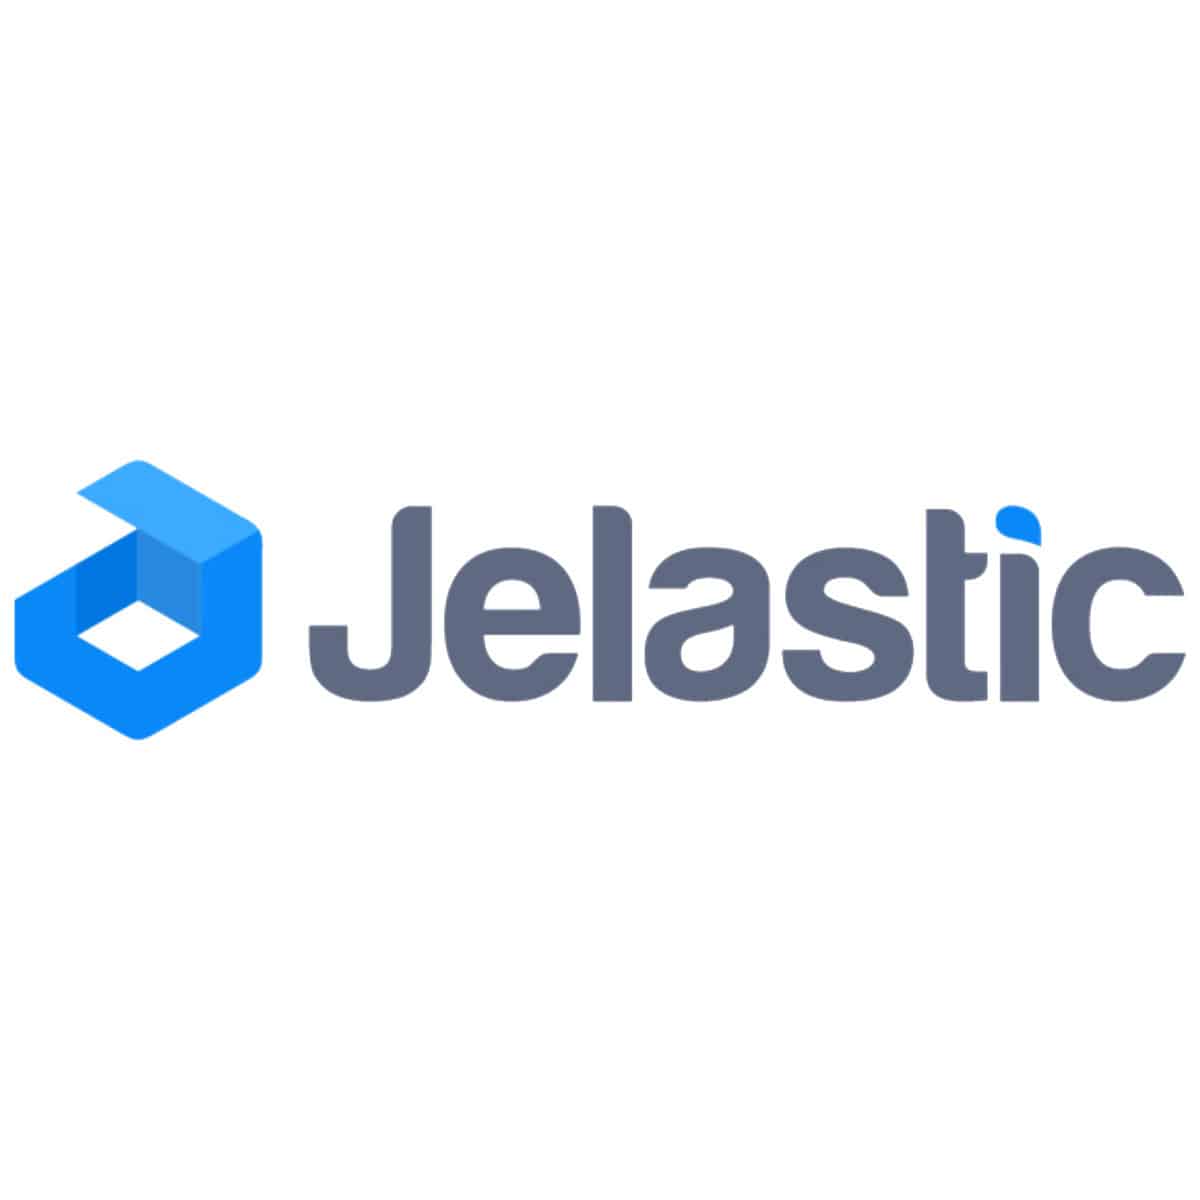 Jelastic - Logo